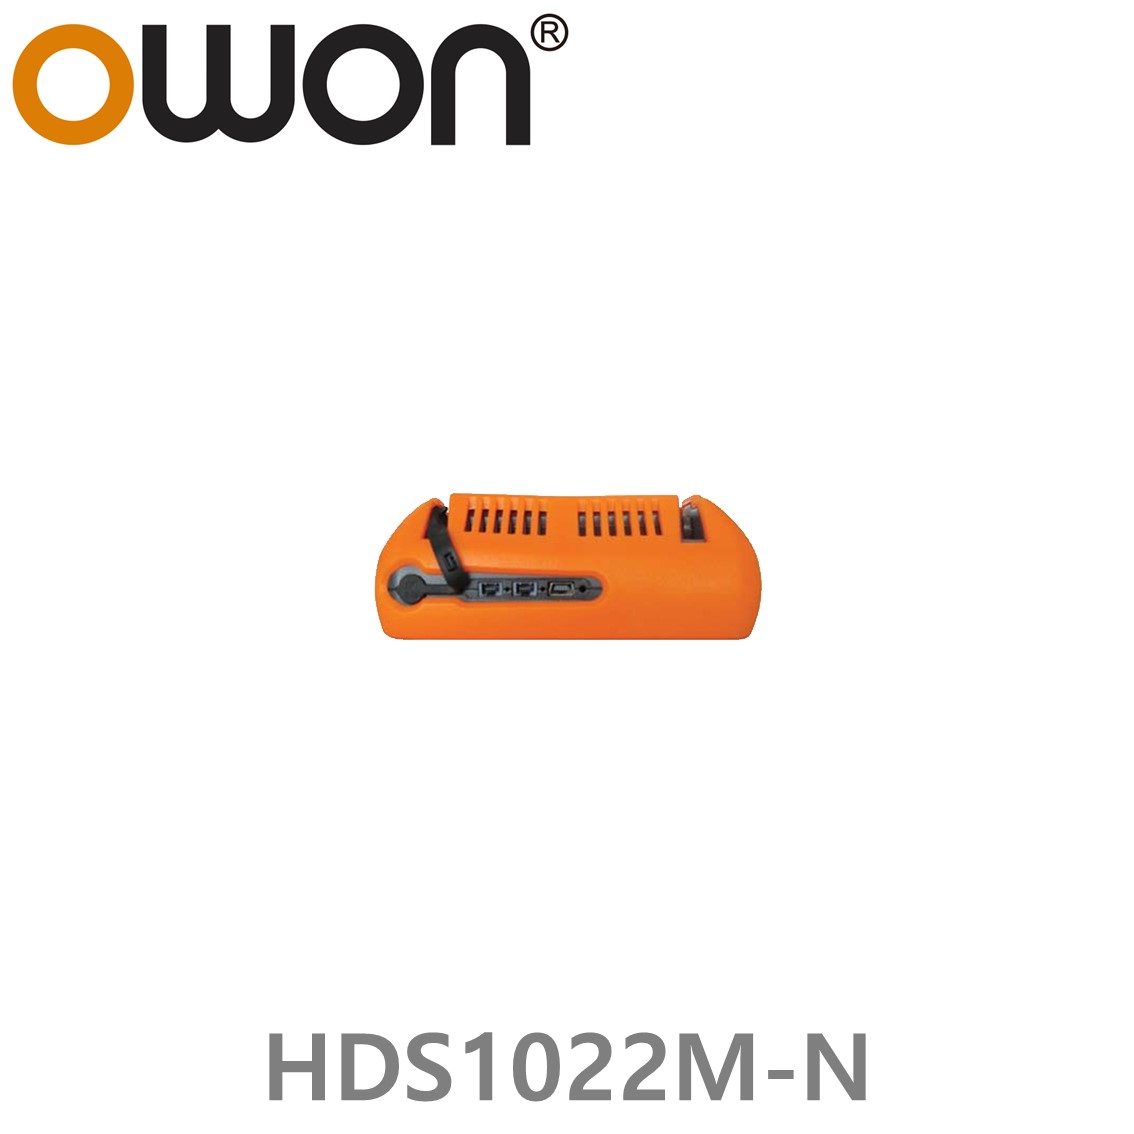 [ OWON ] HDS1022M-N 휴대용 디지탈 오실로스코프, 휴대용 DSO, 20MHz, 2CH, 100MS/s 1GS/s